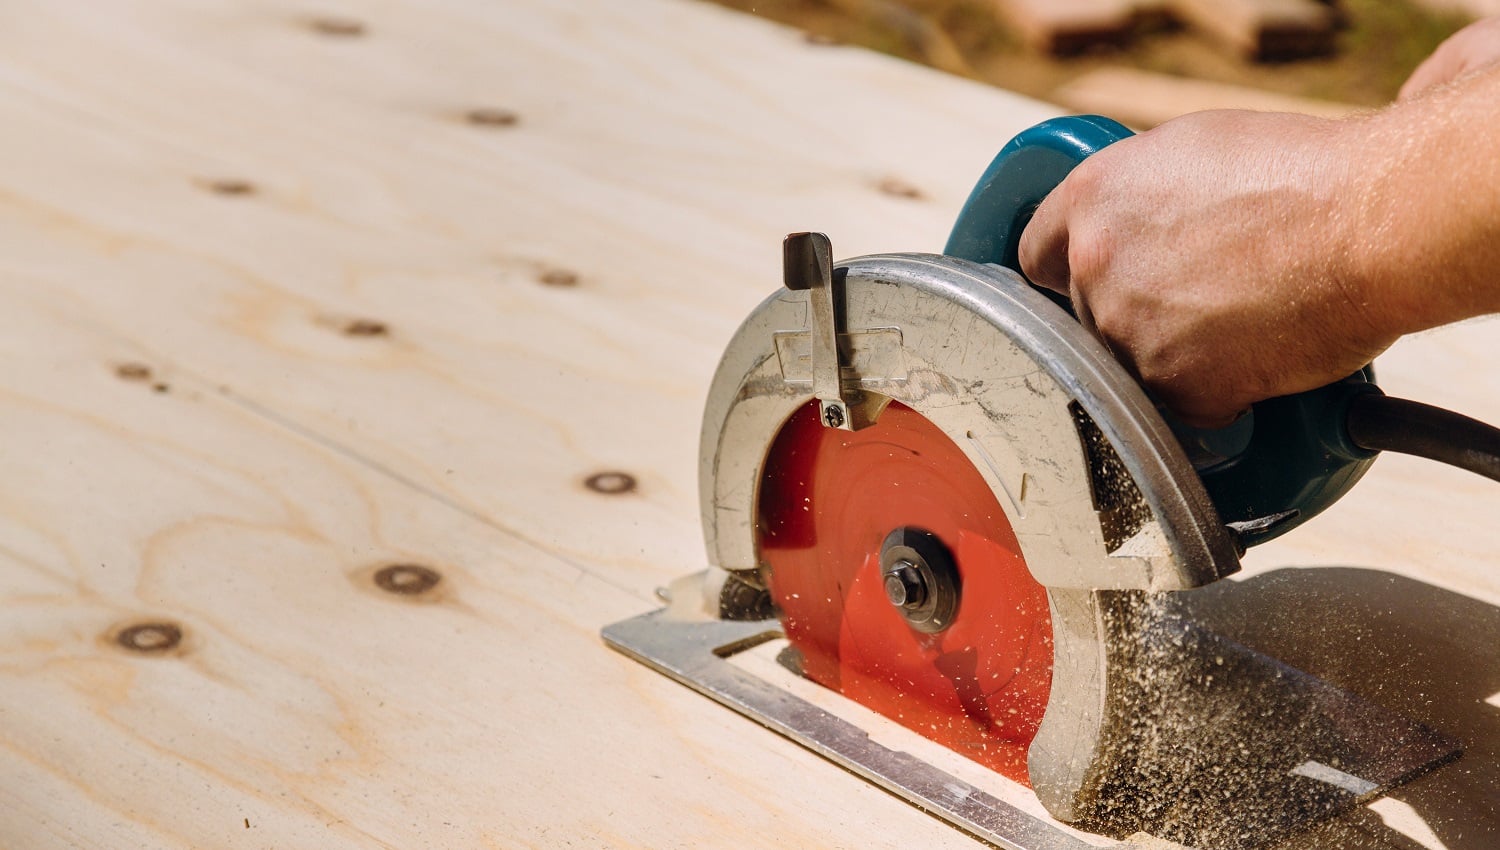 Handyman cutting plywood on hand held worm drive circular saw